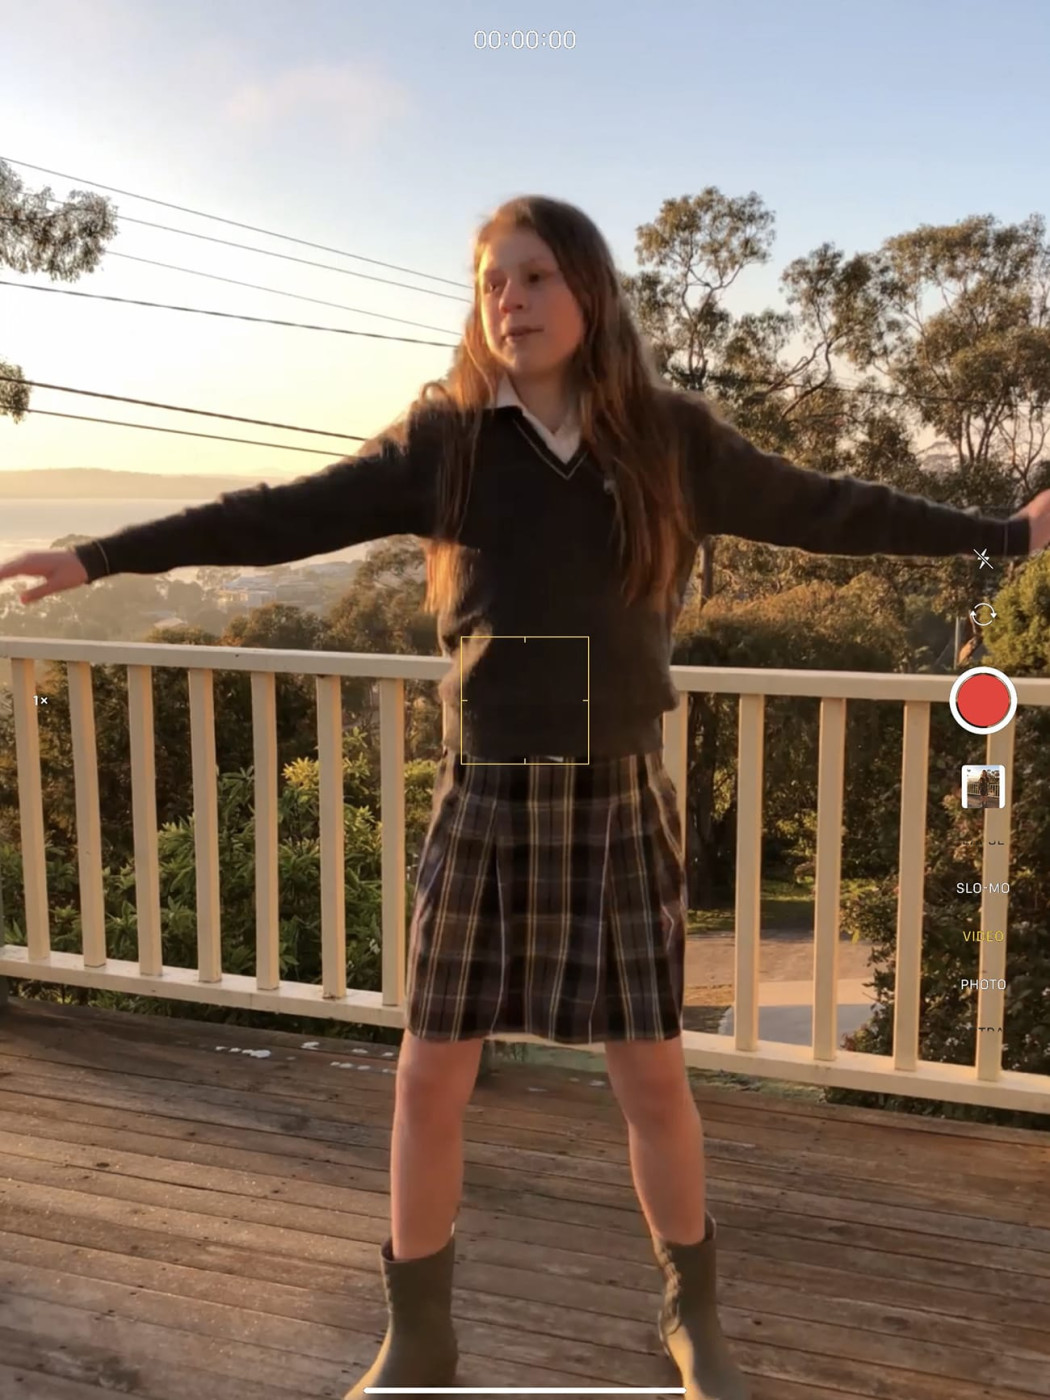 Screenshot of iPad using the Camera App to record a girl dancing